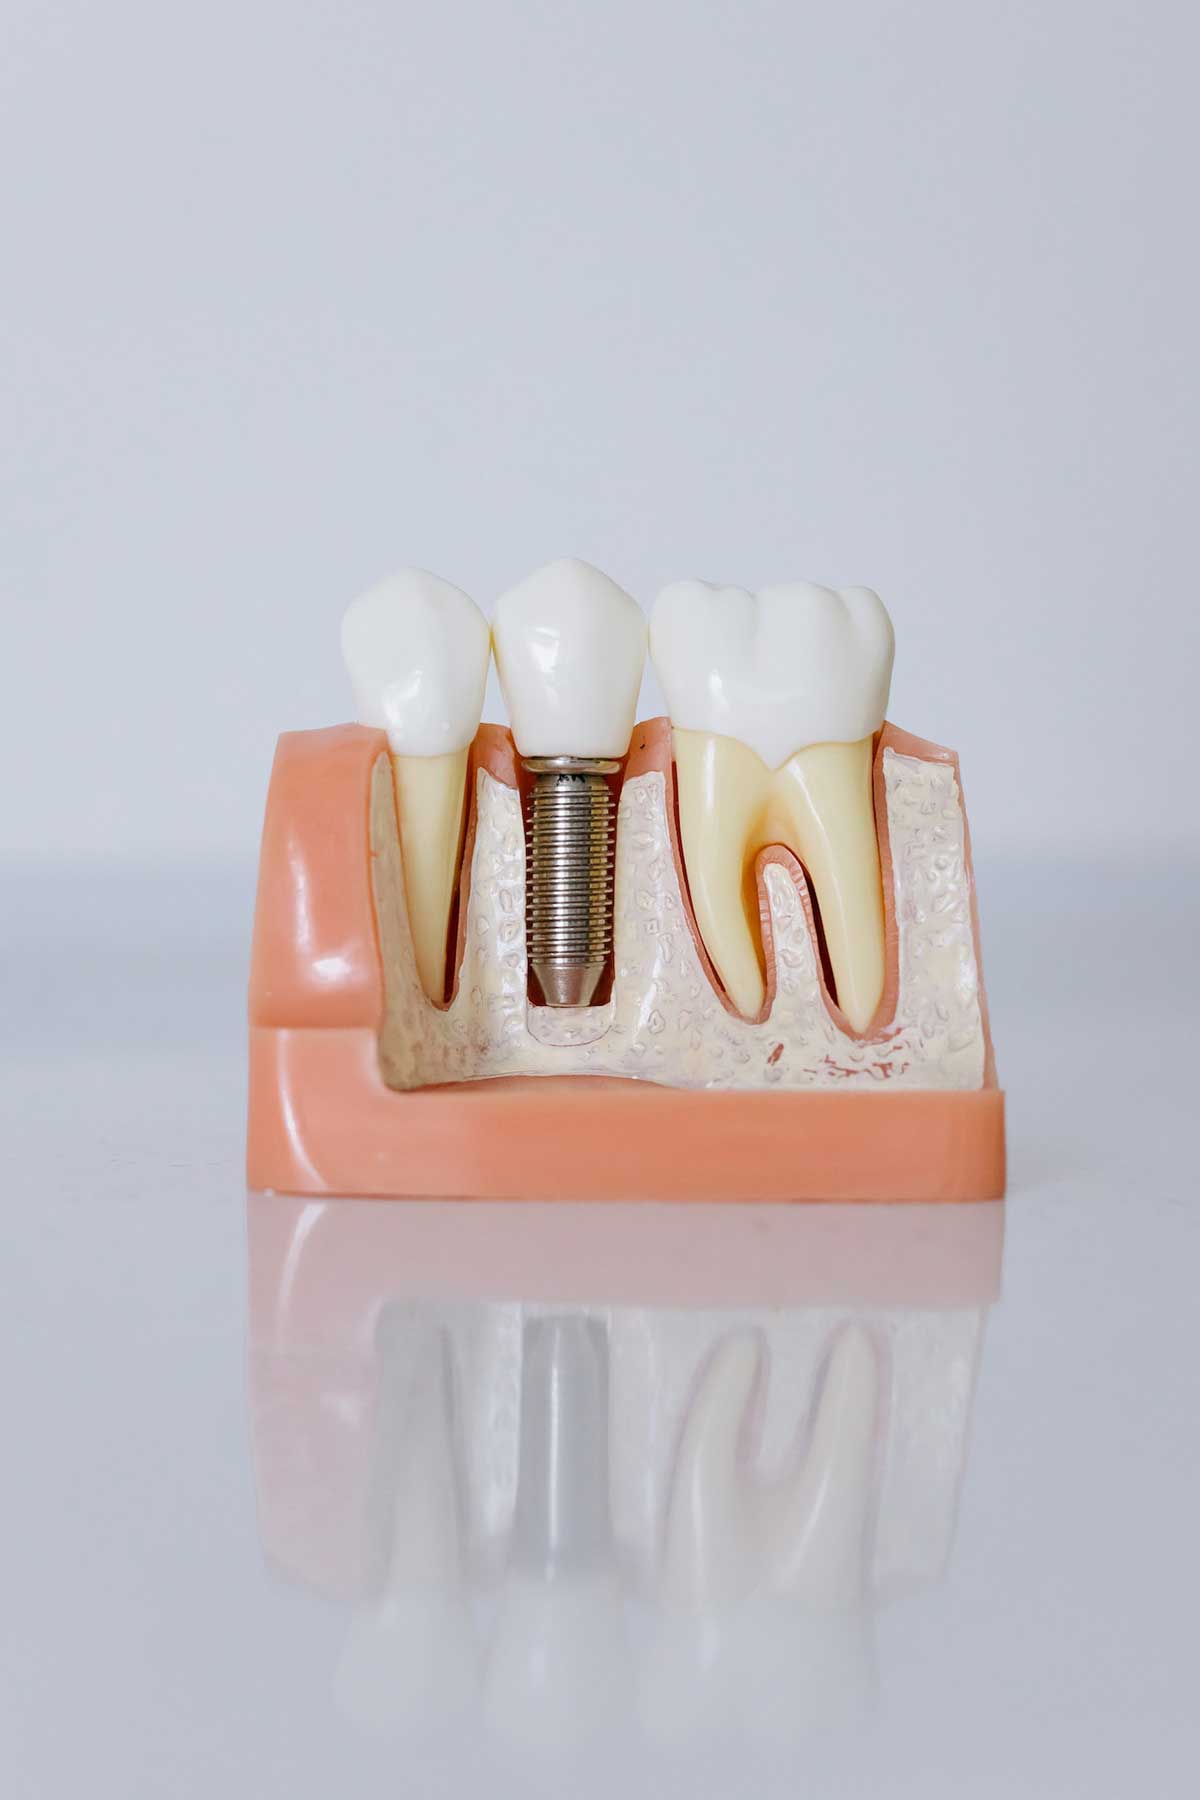 Dental implant example